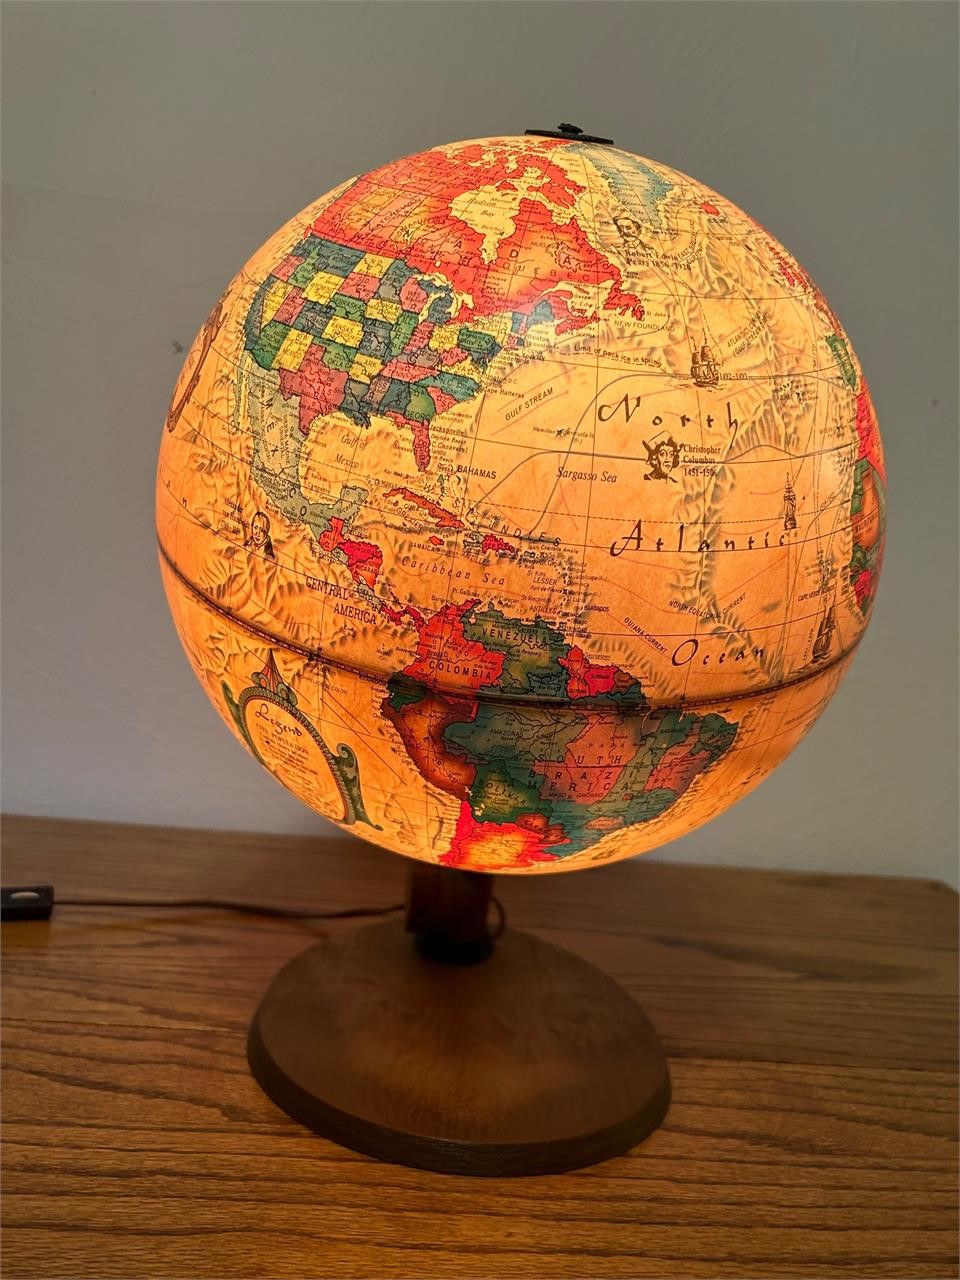 Lighted 12” Readers Digest Globe